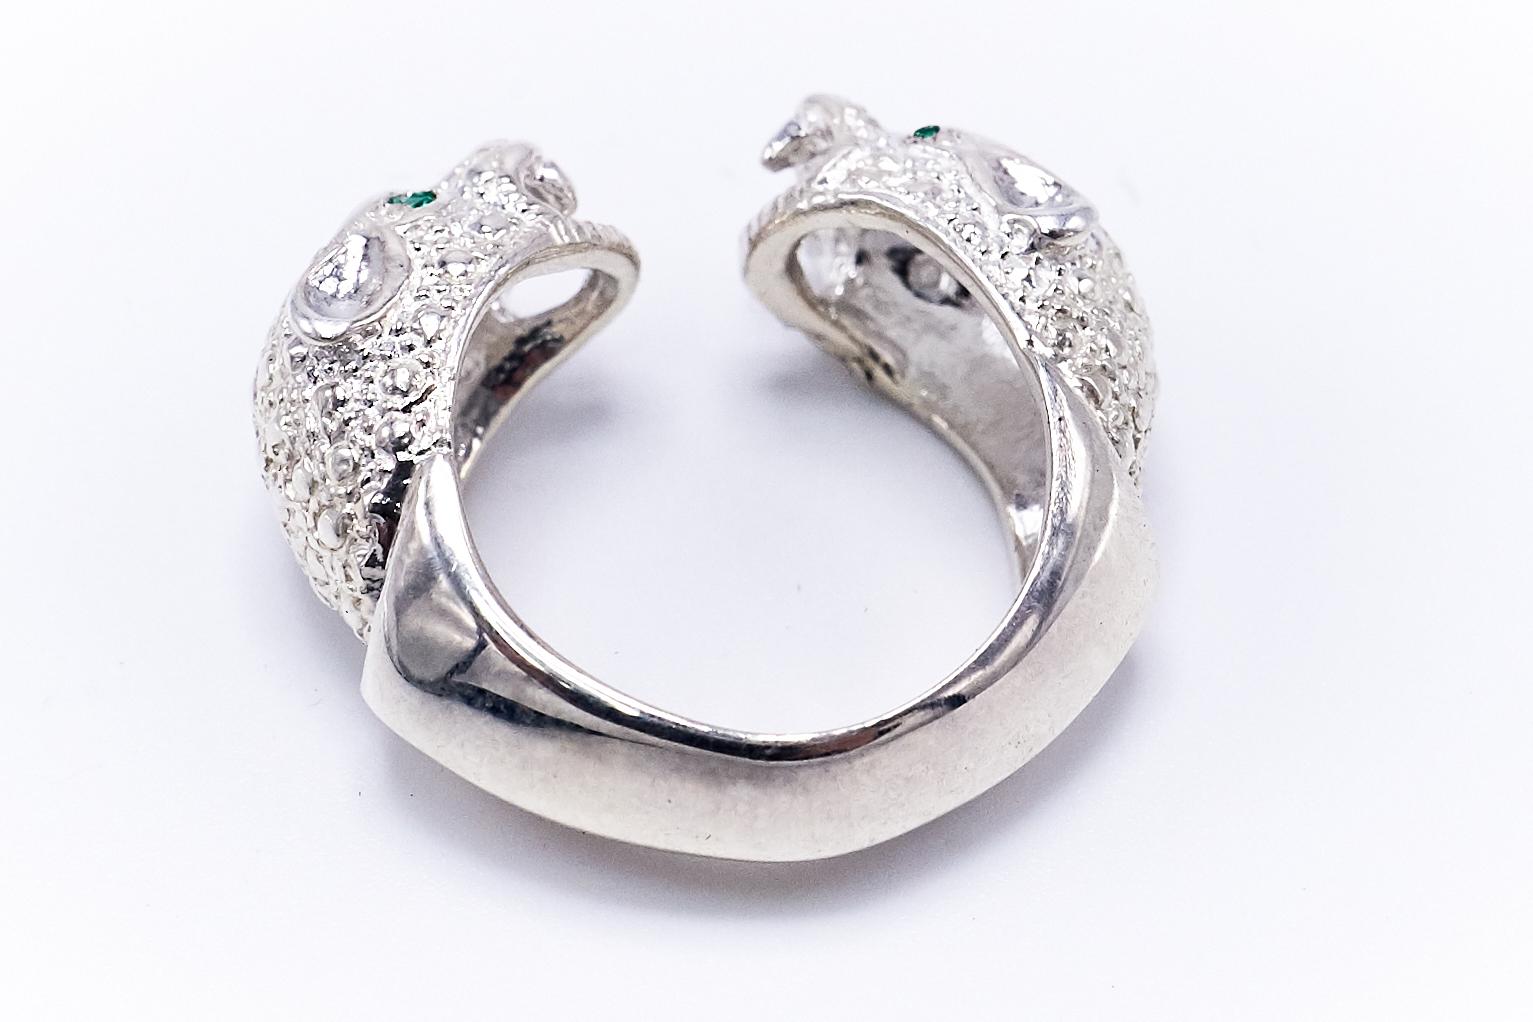 Brilliant Cut Emerald Jaguar Ring Silver Animal Jewelry Cocktail J Dauphin For Sale